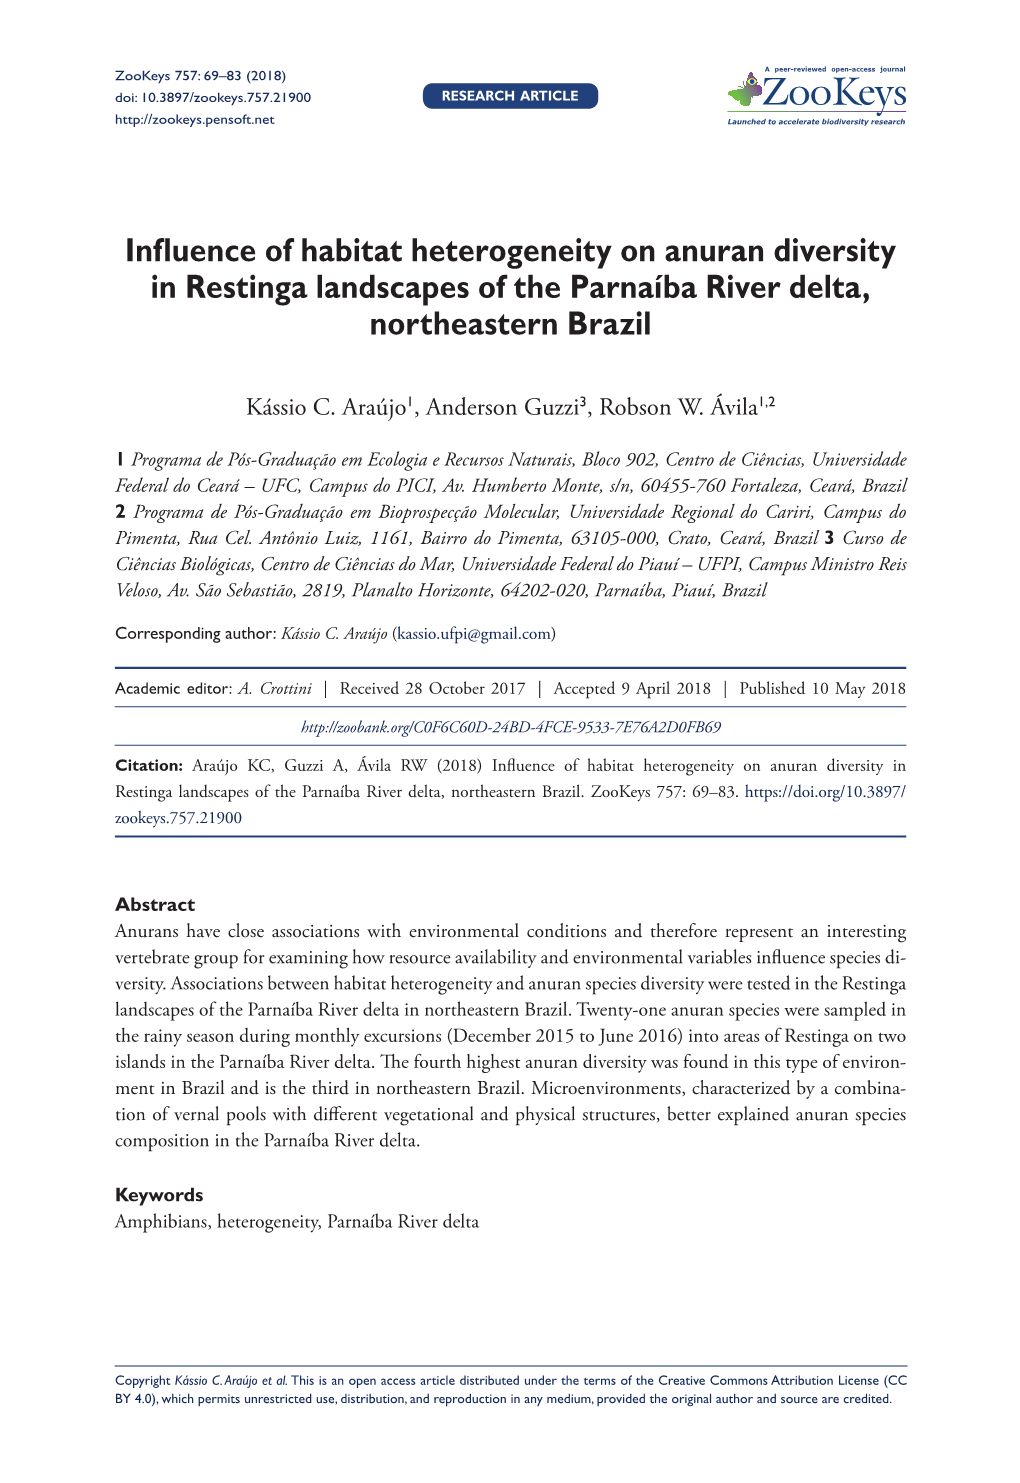 Influence of Habitat Heterogeneity on Anuran Diversity in Restinga Landscapes of the Parnaíba River Delta, Northeastern Brazil